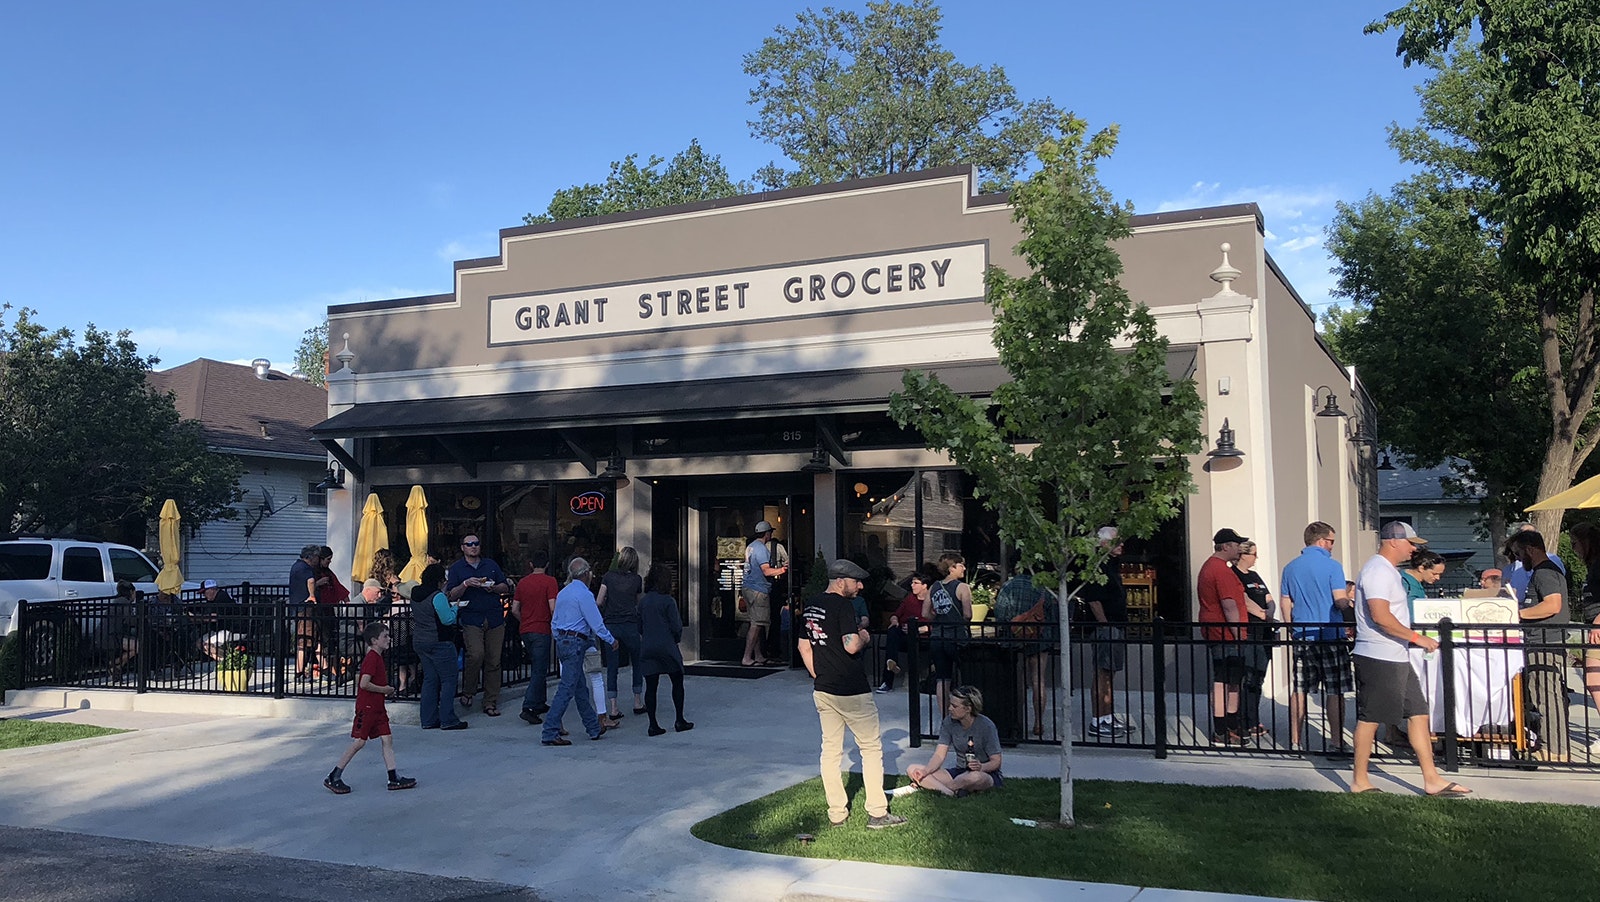 Grant Street Grocery in Casper is a busy place.